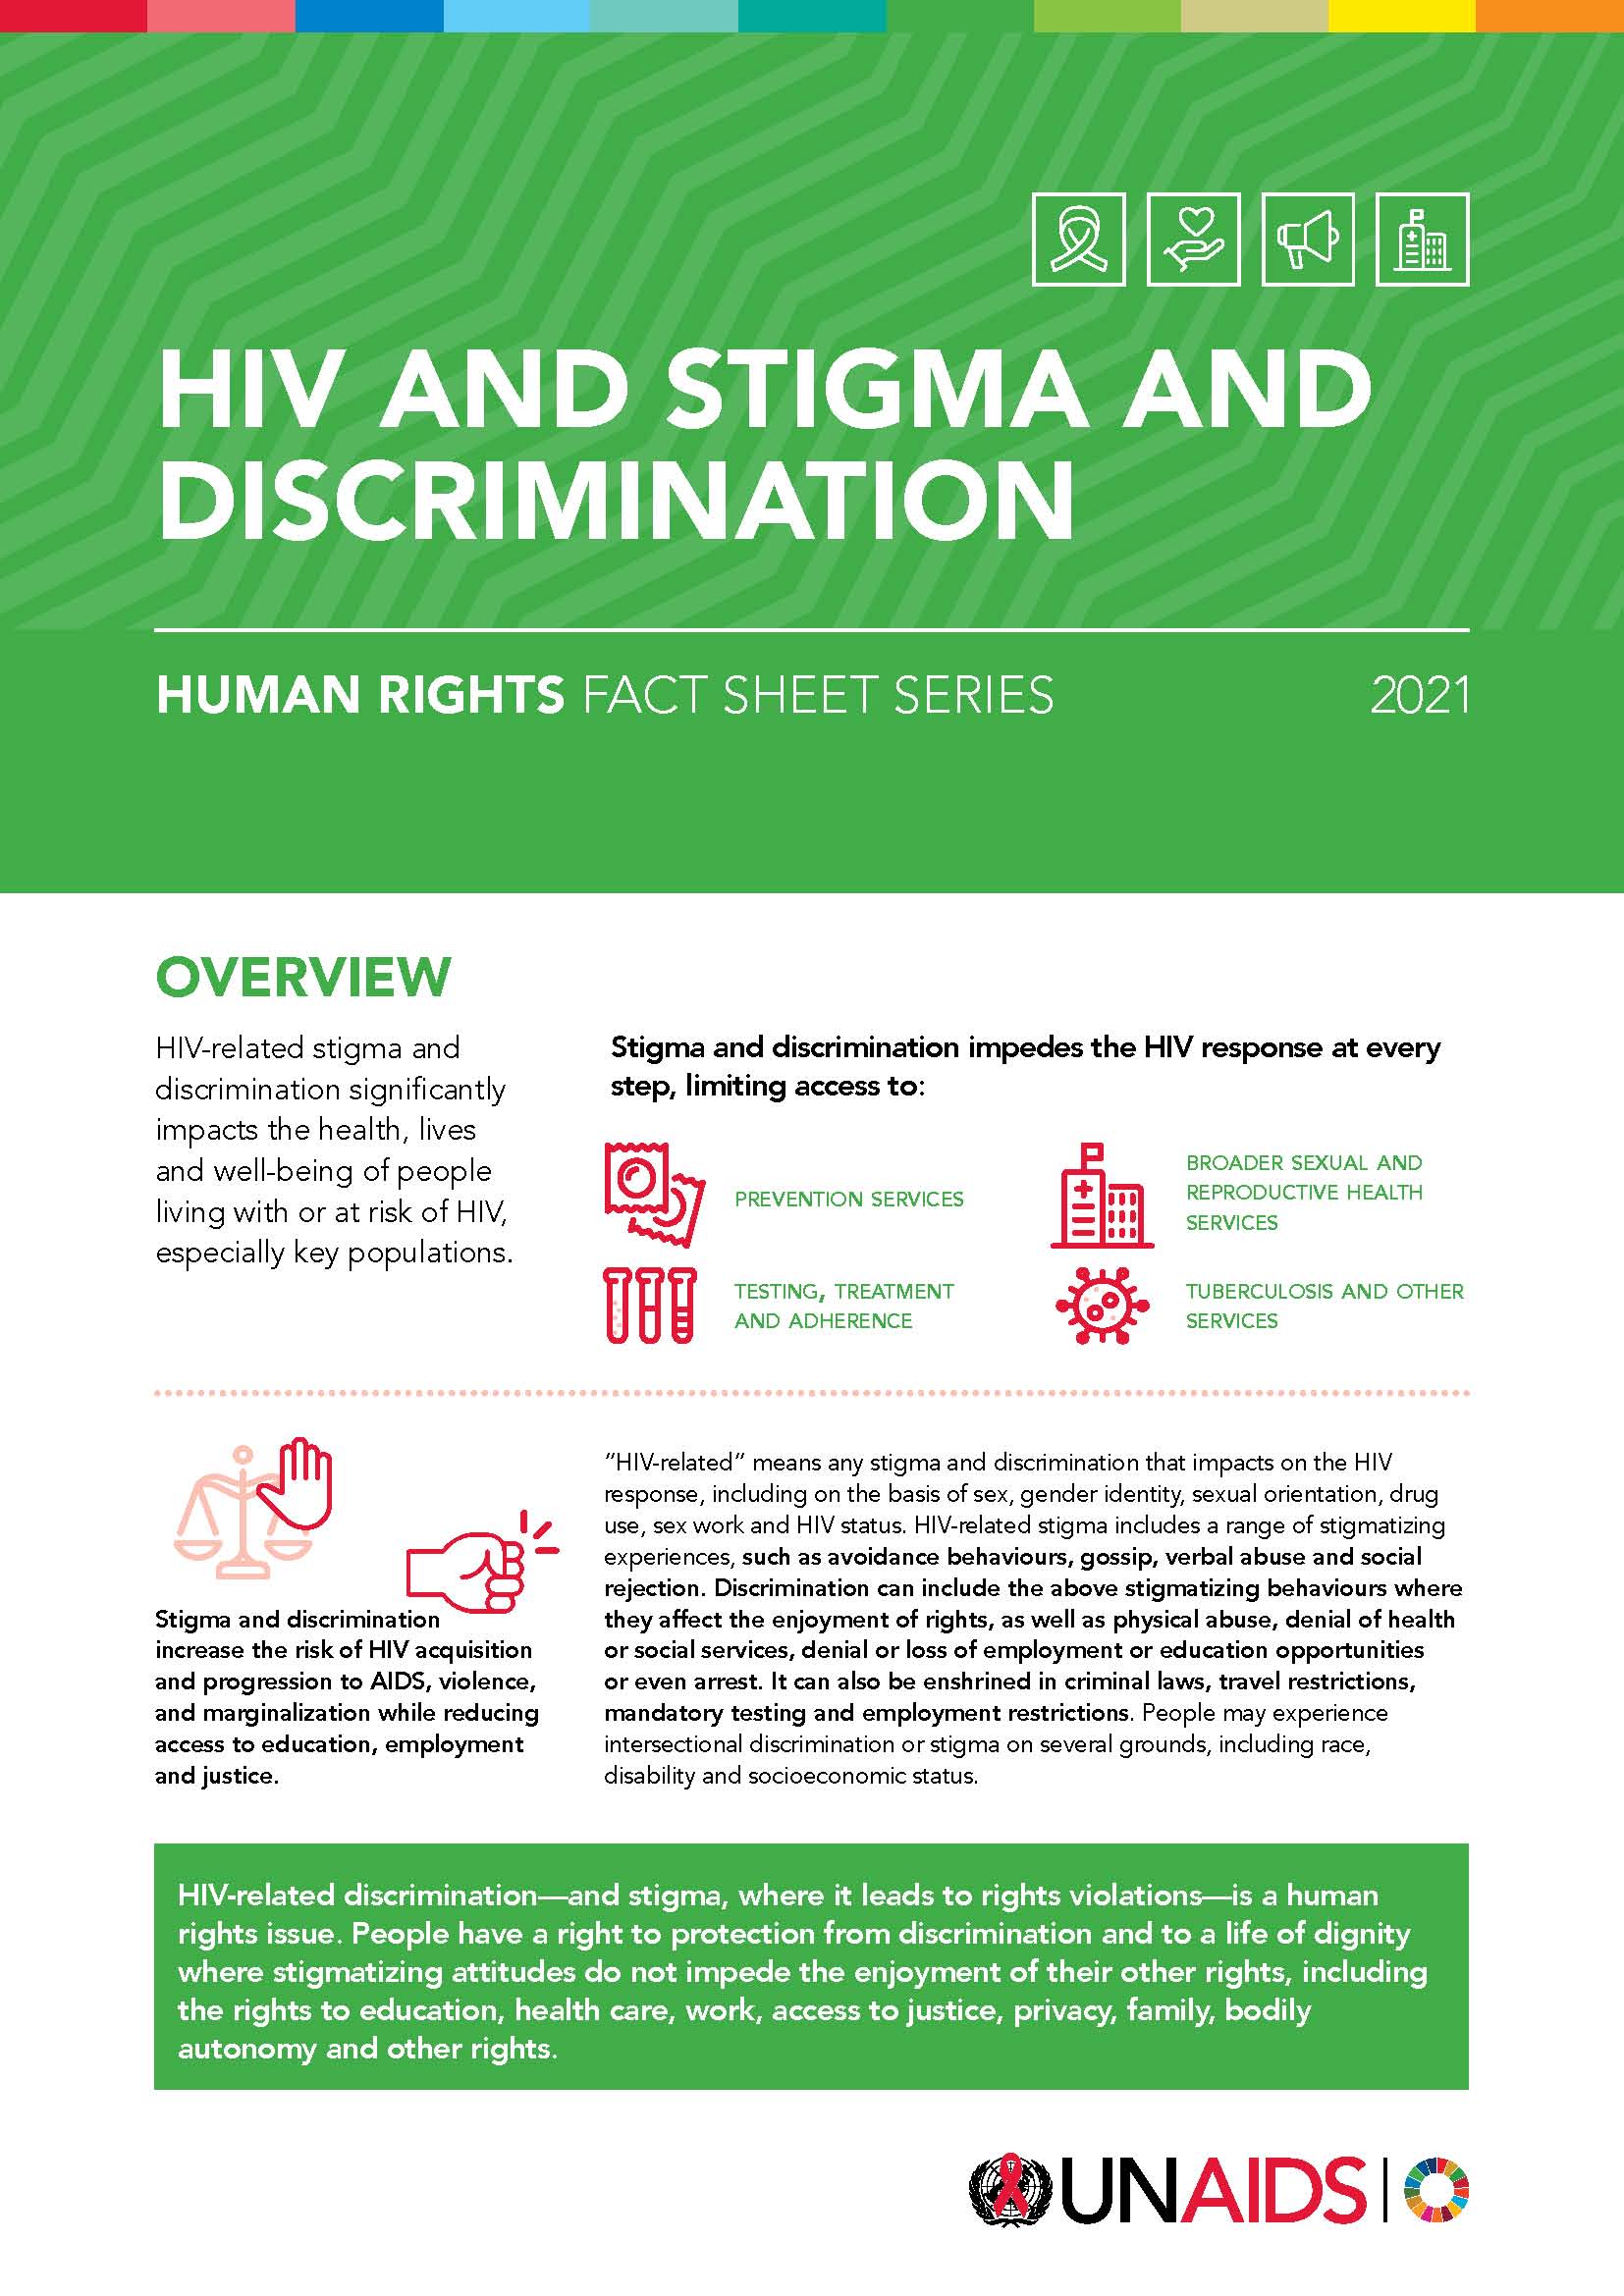 VIH, stigmatisation et discrimination